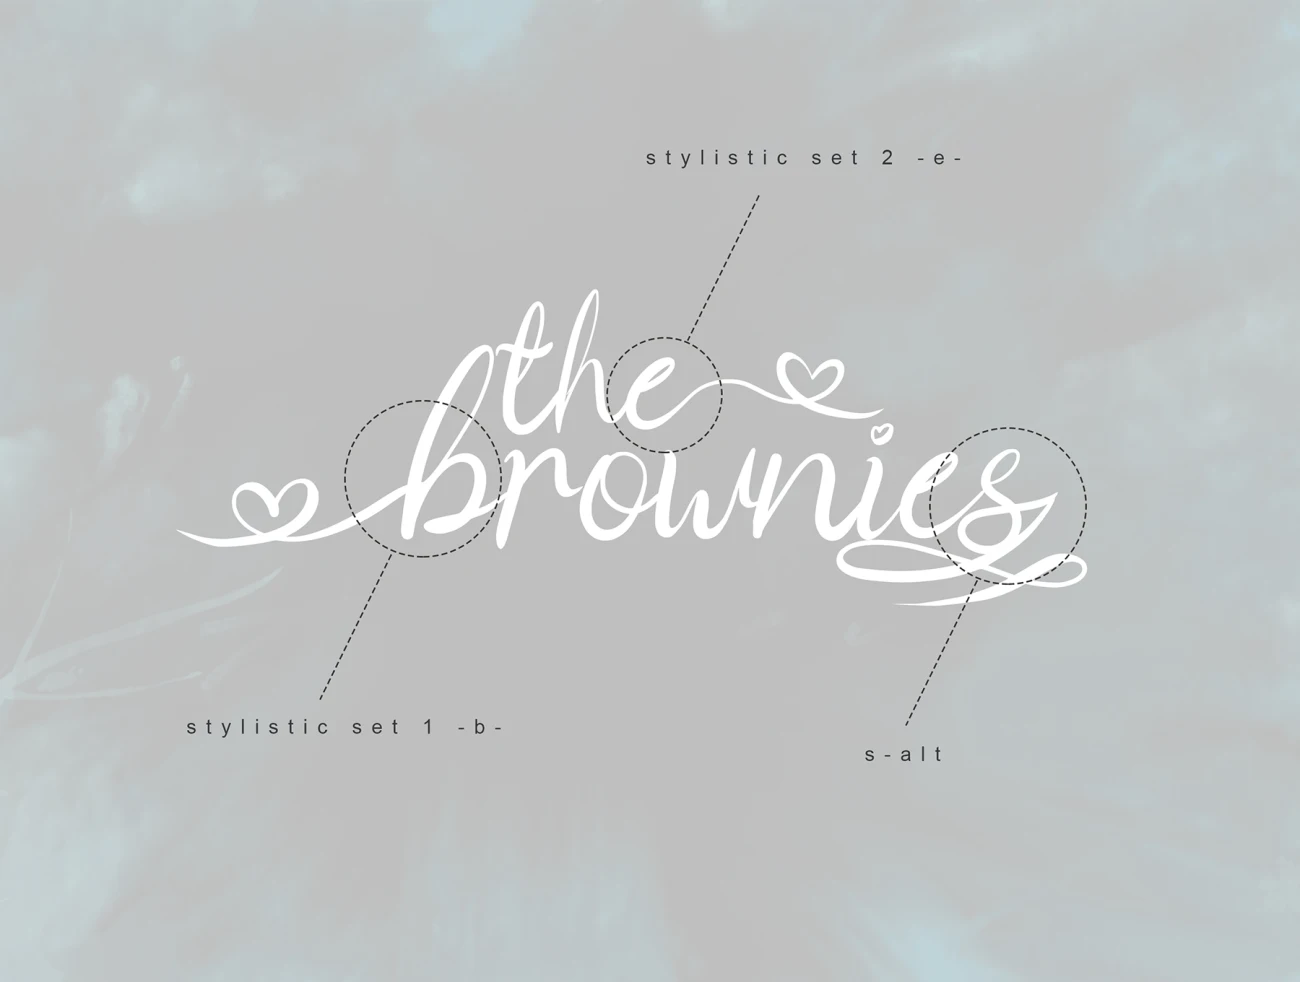 The Brownies Romantic Love Font 浪漫爱情连体英文字体-字体-到位啦UI